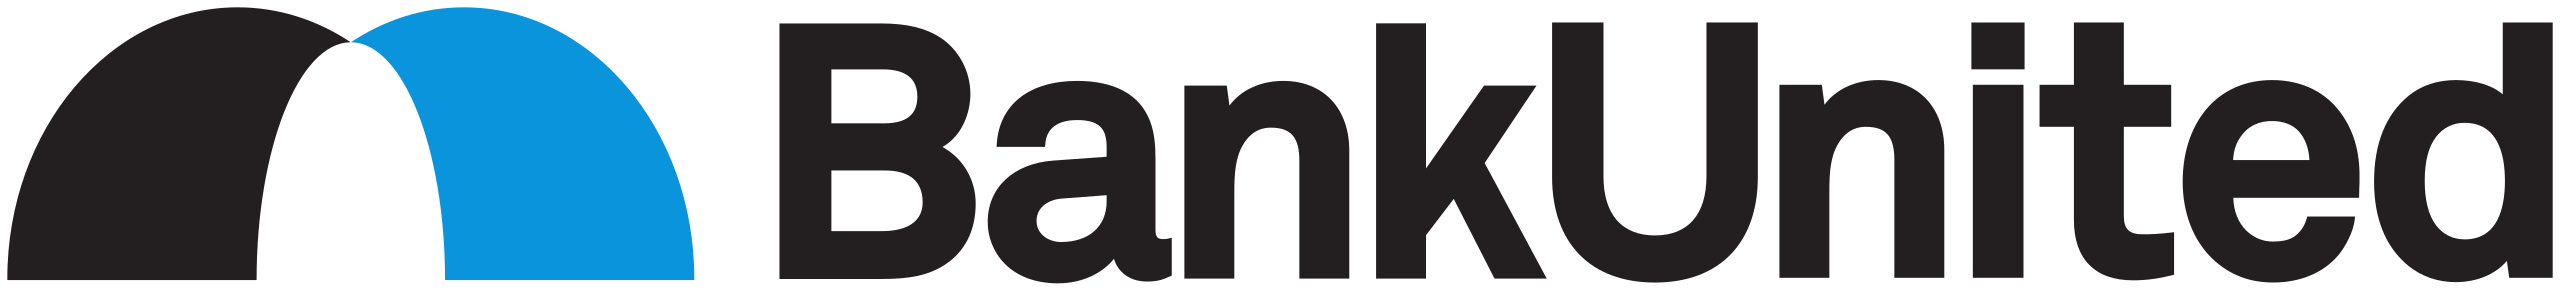 BankUnited logo.svg